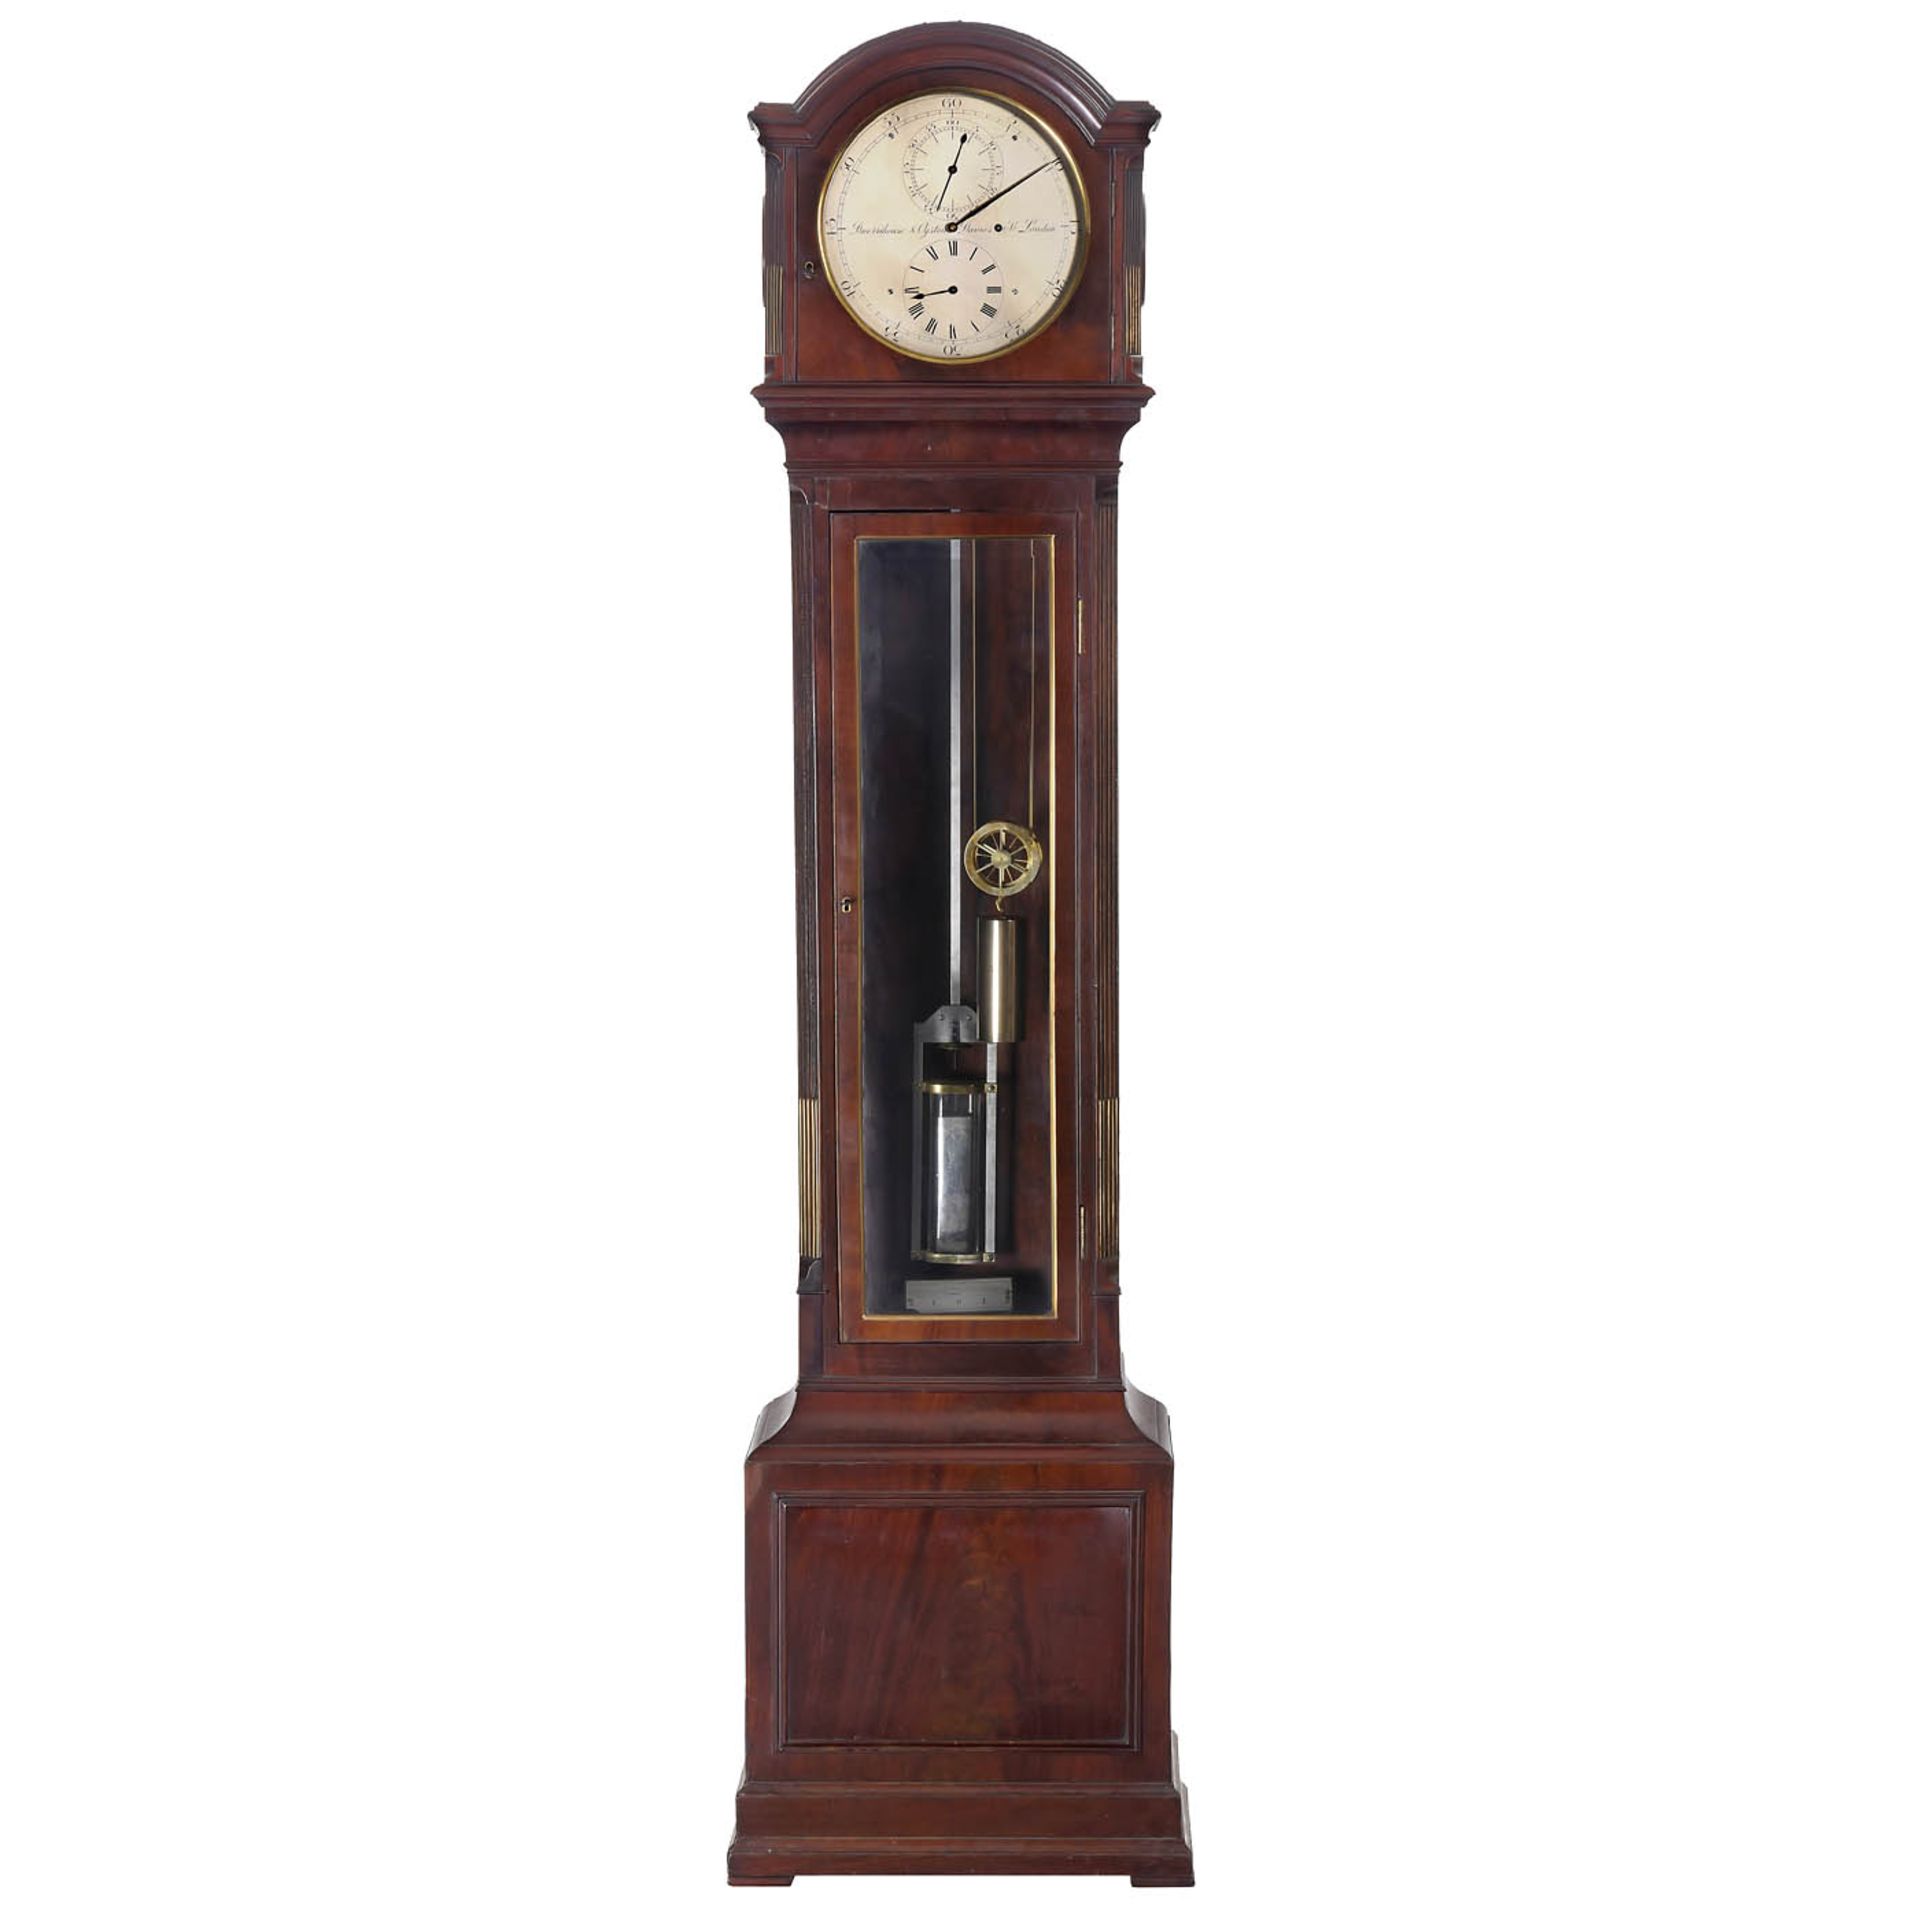 English Mercury Pendulum Longcase Astronomical Regulator Clock, c. 1830